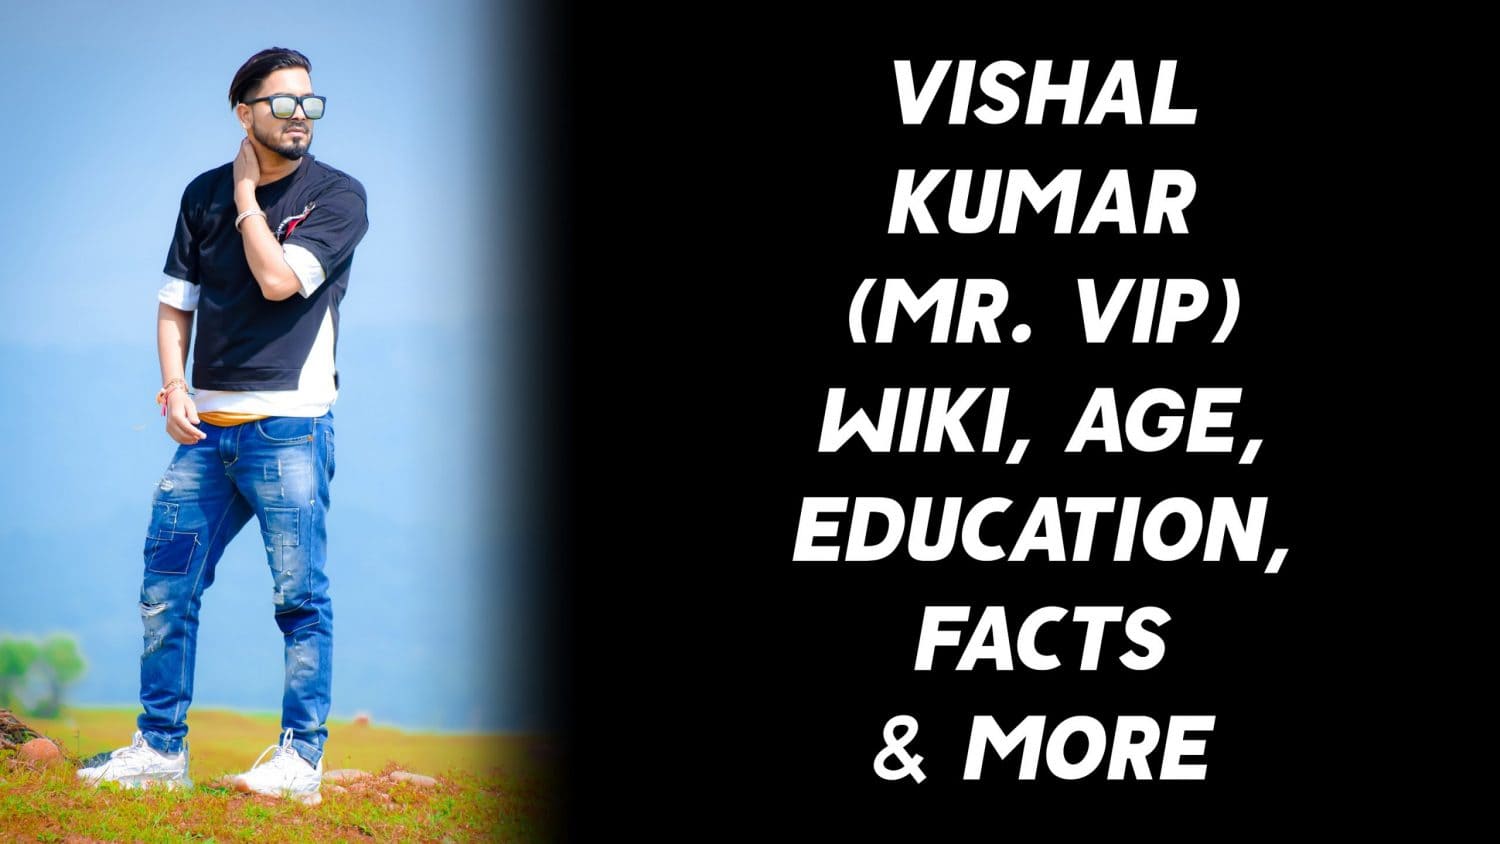 Mr. Vishal Kumar (Mr. VIP) Wiki, Age, Education, Facts & More 1